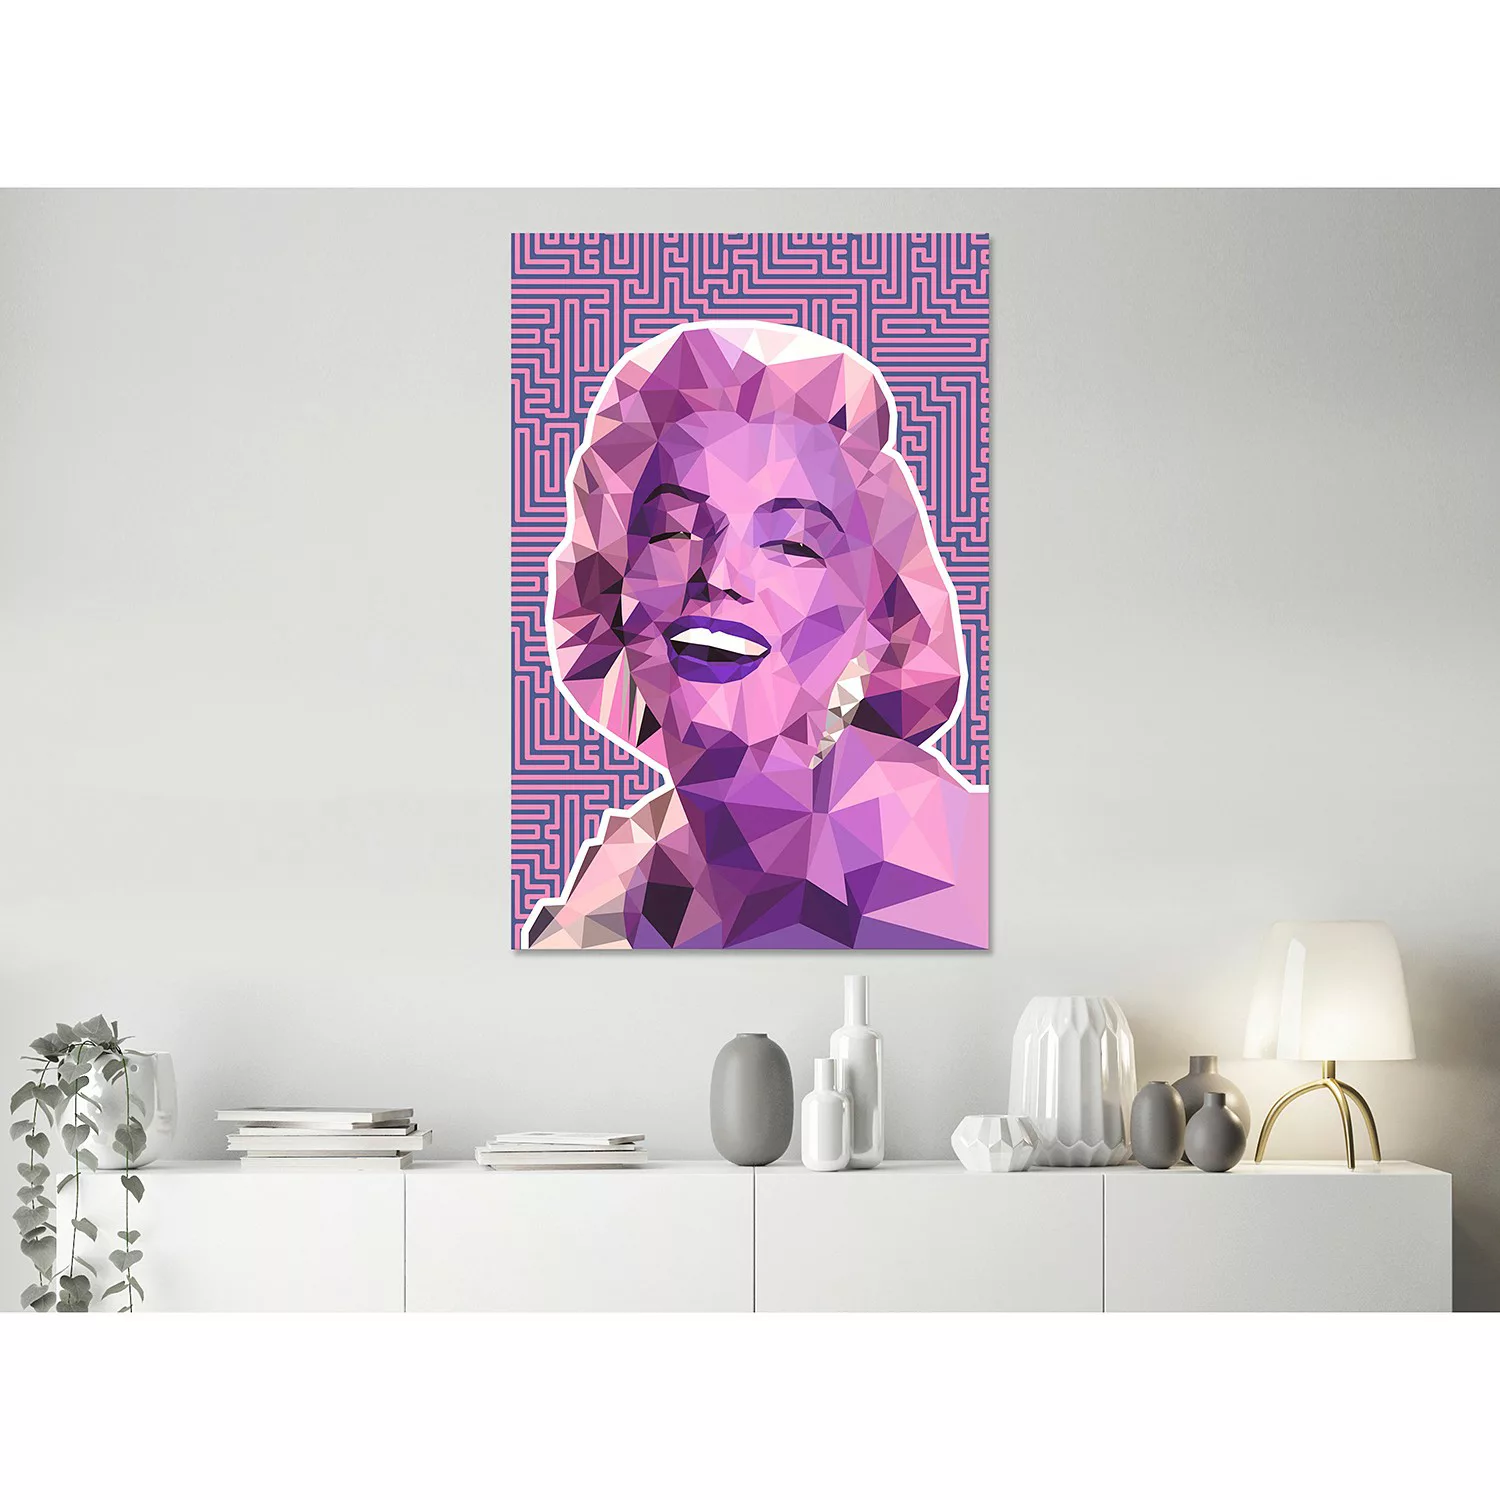 Wandbild - Monroe (1 Part) Vertical günstig online kaufen